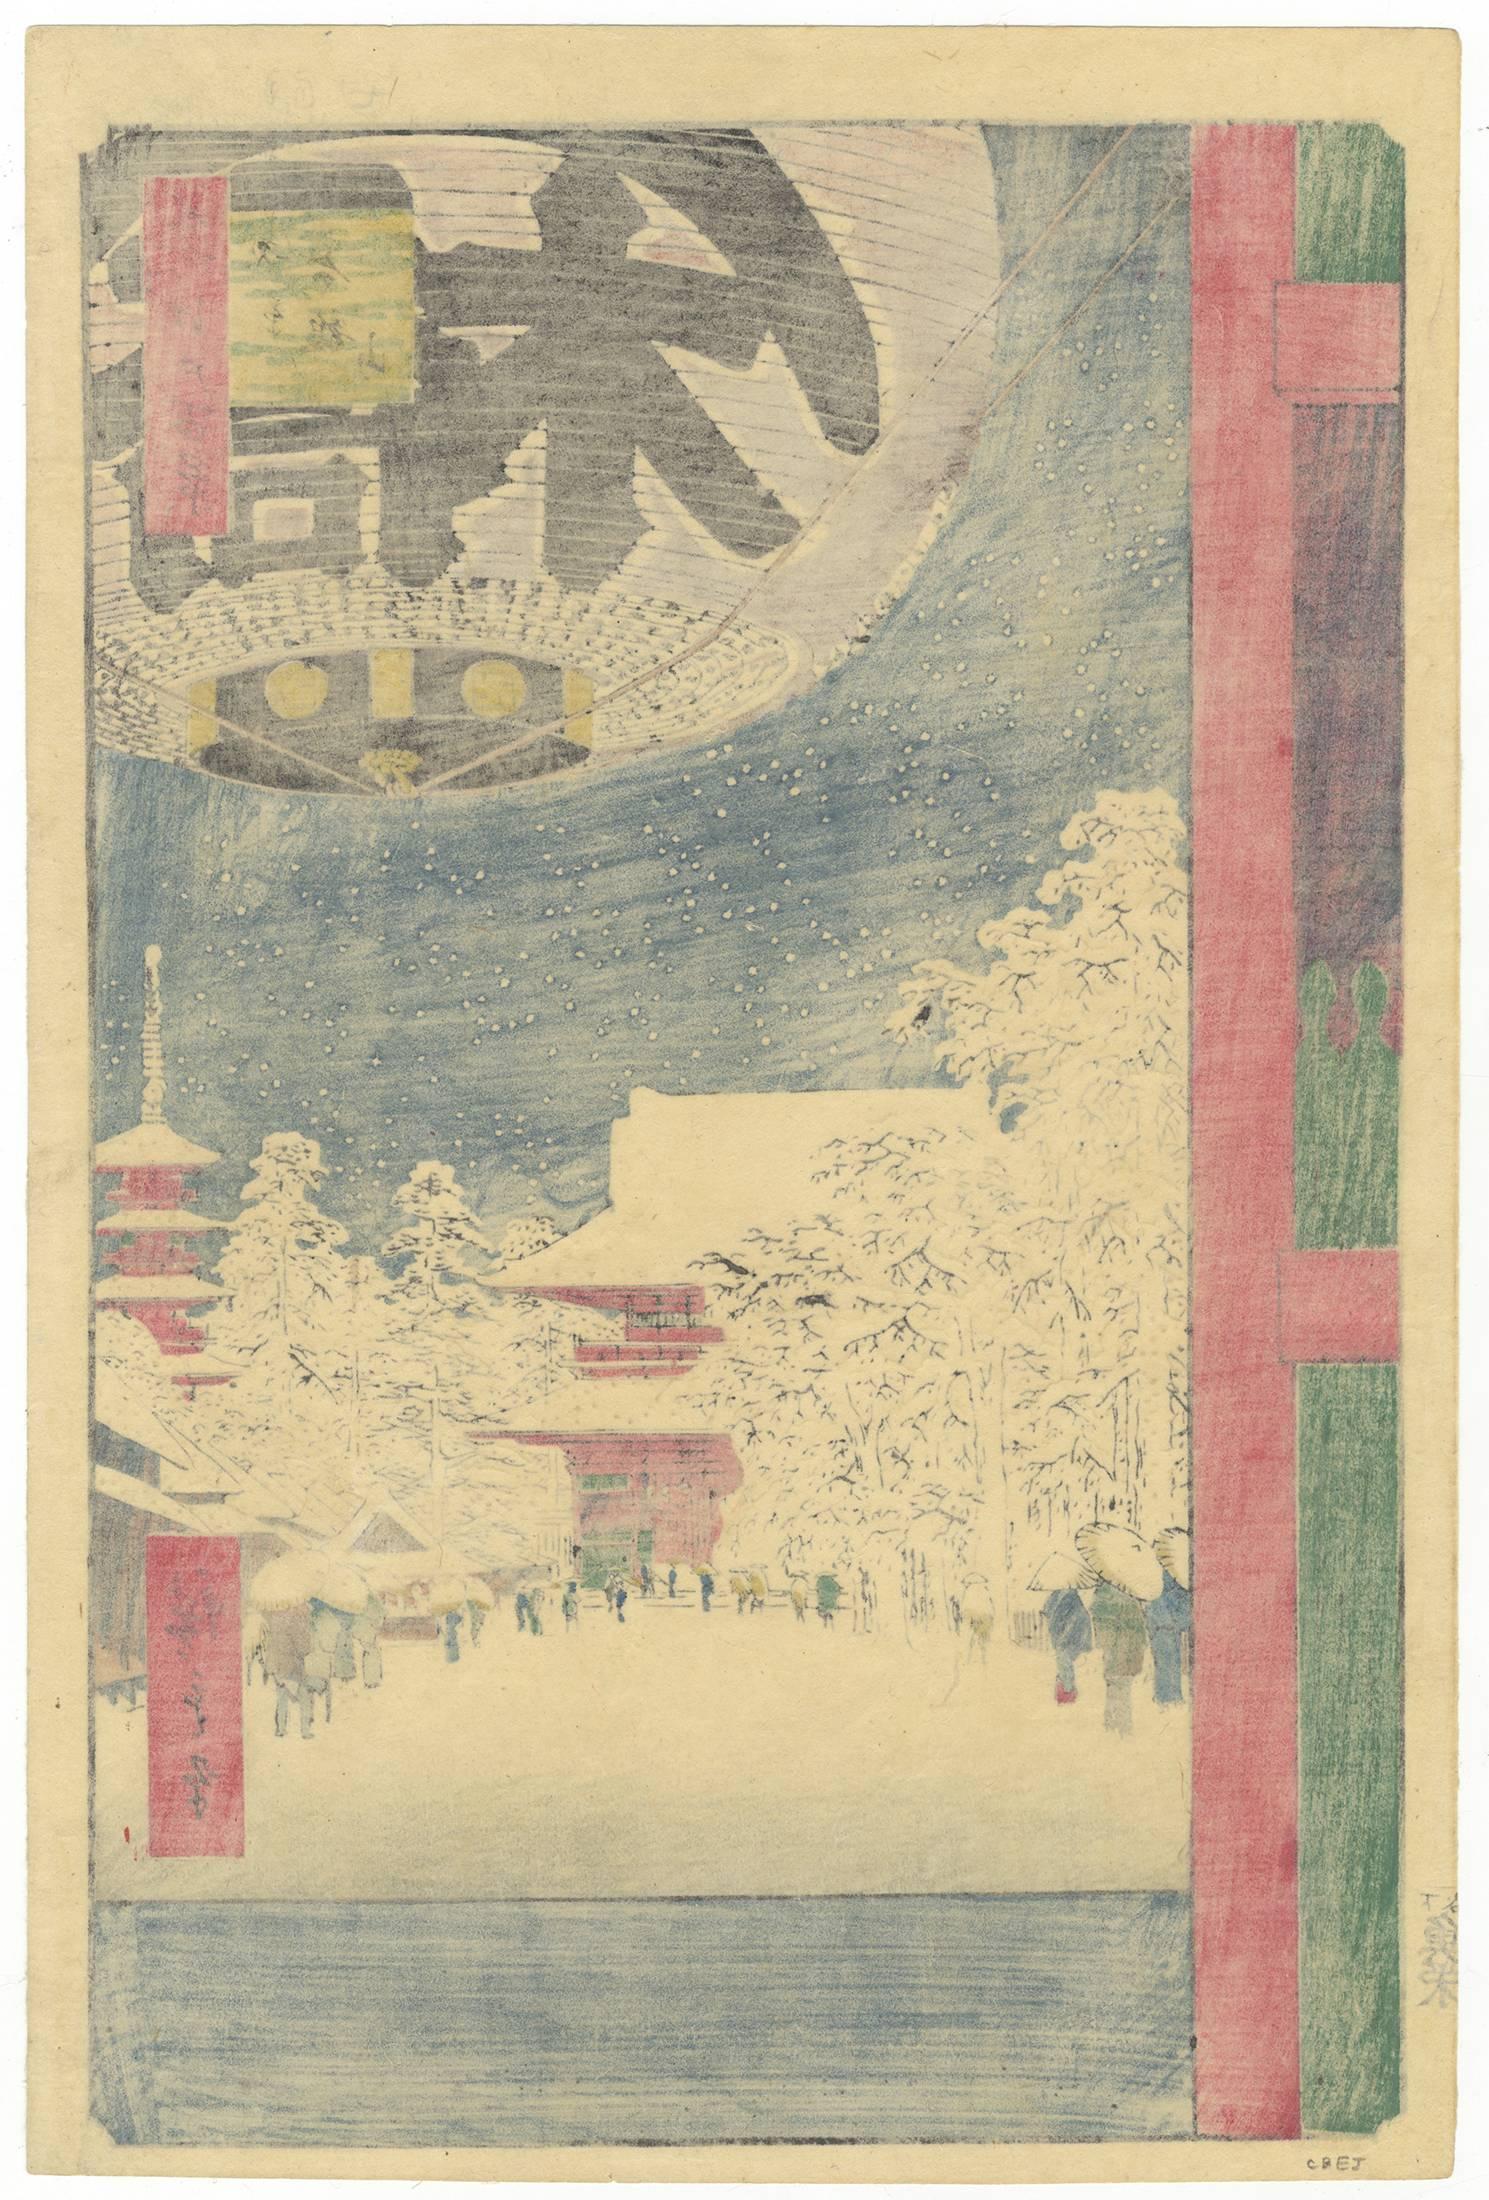 Artist: Utagawa Hiroshige (1797–1858)
Title: Kinryuzan Temple, Asakusa (Asakusa Kinryuzan)
Series: No. 99 from 'One Hundred Famous View of Edo'
Publisher: 
Published: 1856-1857

Hiroshige is considered one of the greatest Japanese printmaking